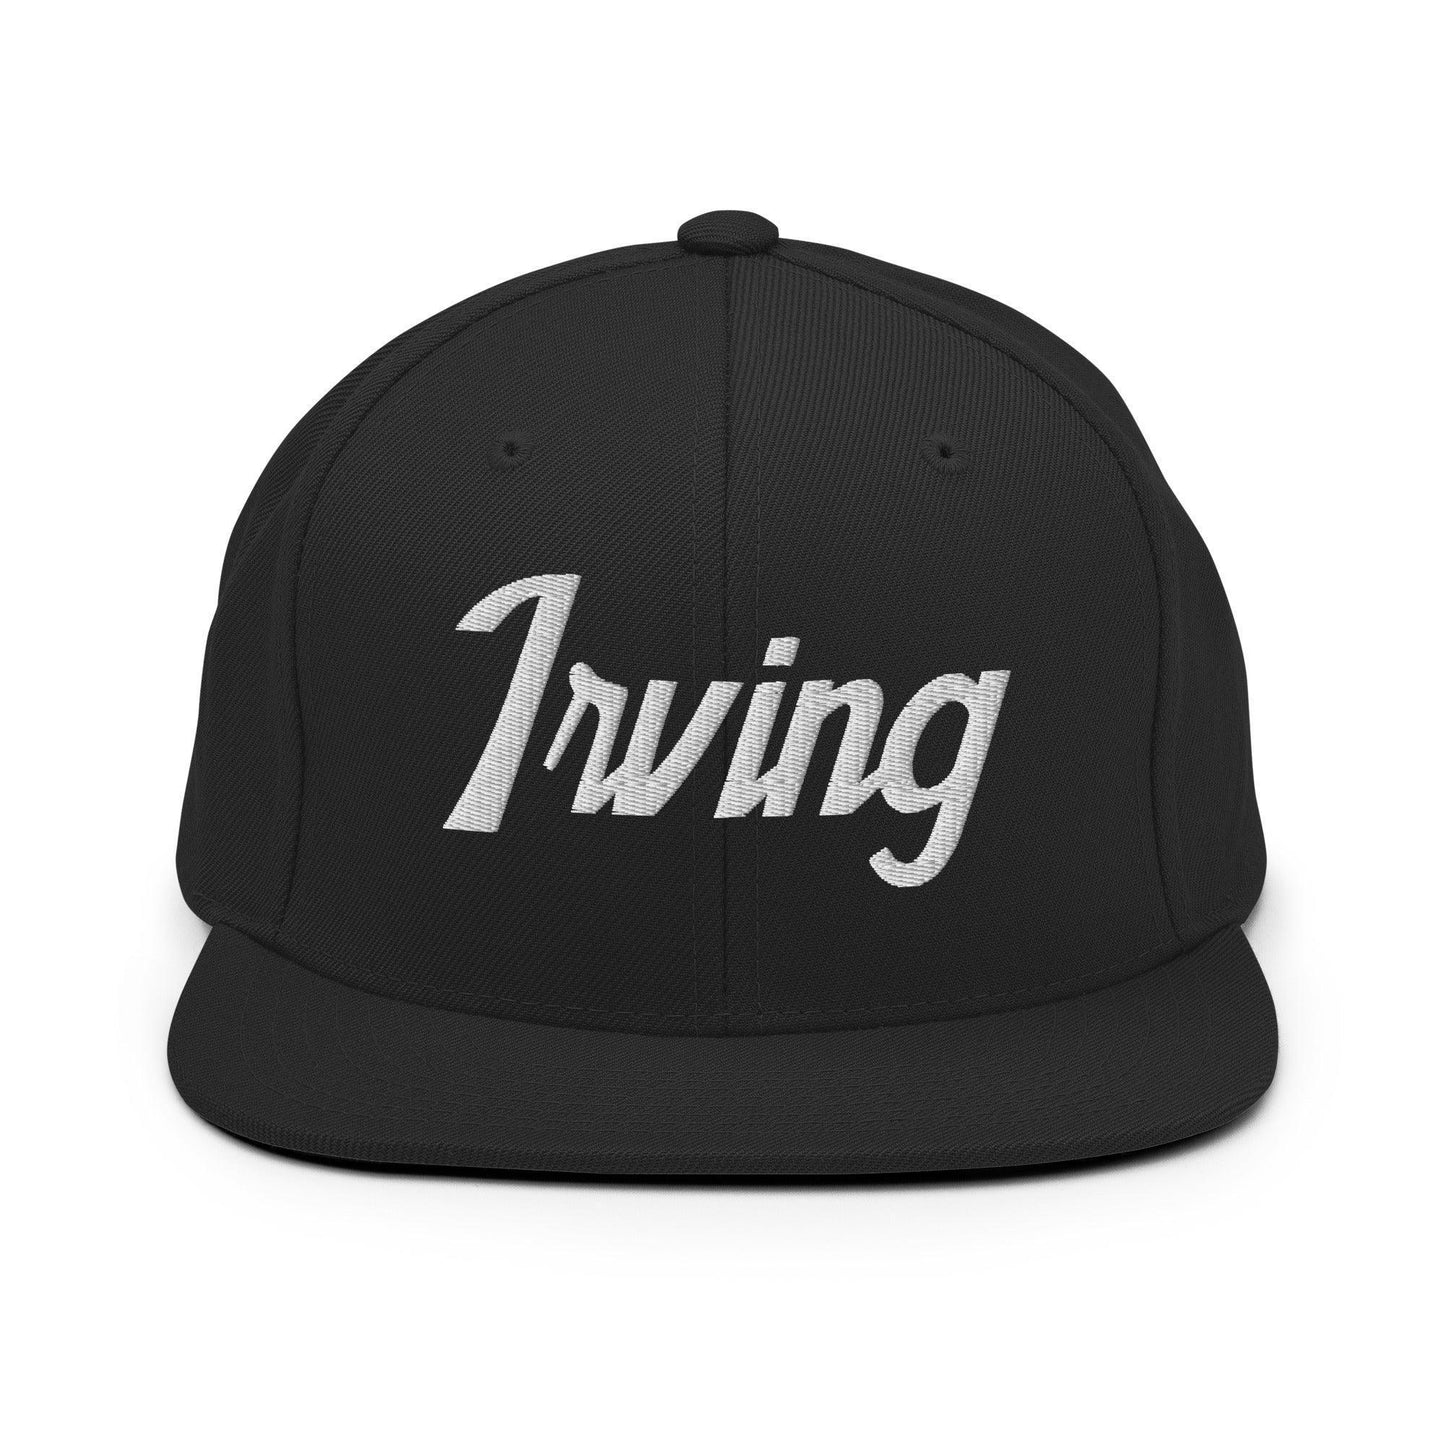 Irving Script Snapback Hat Black